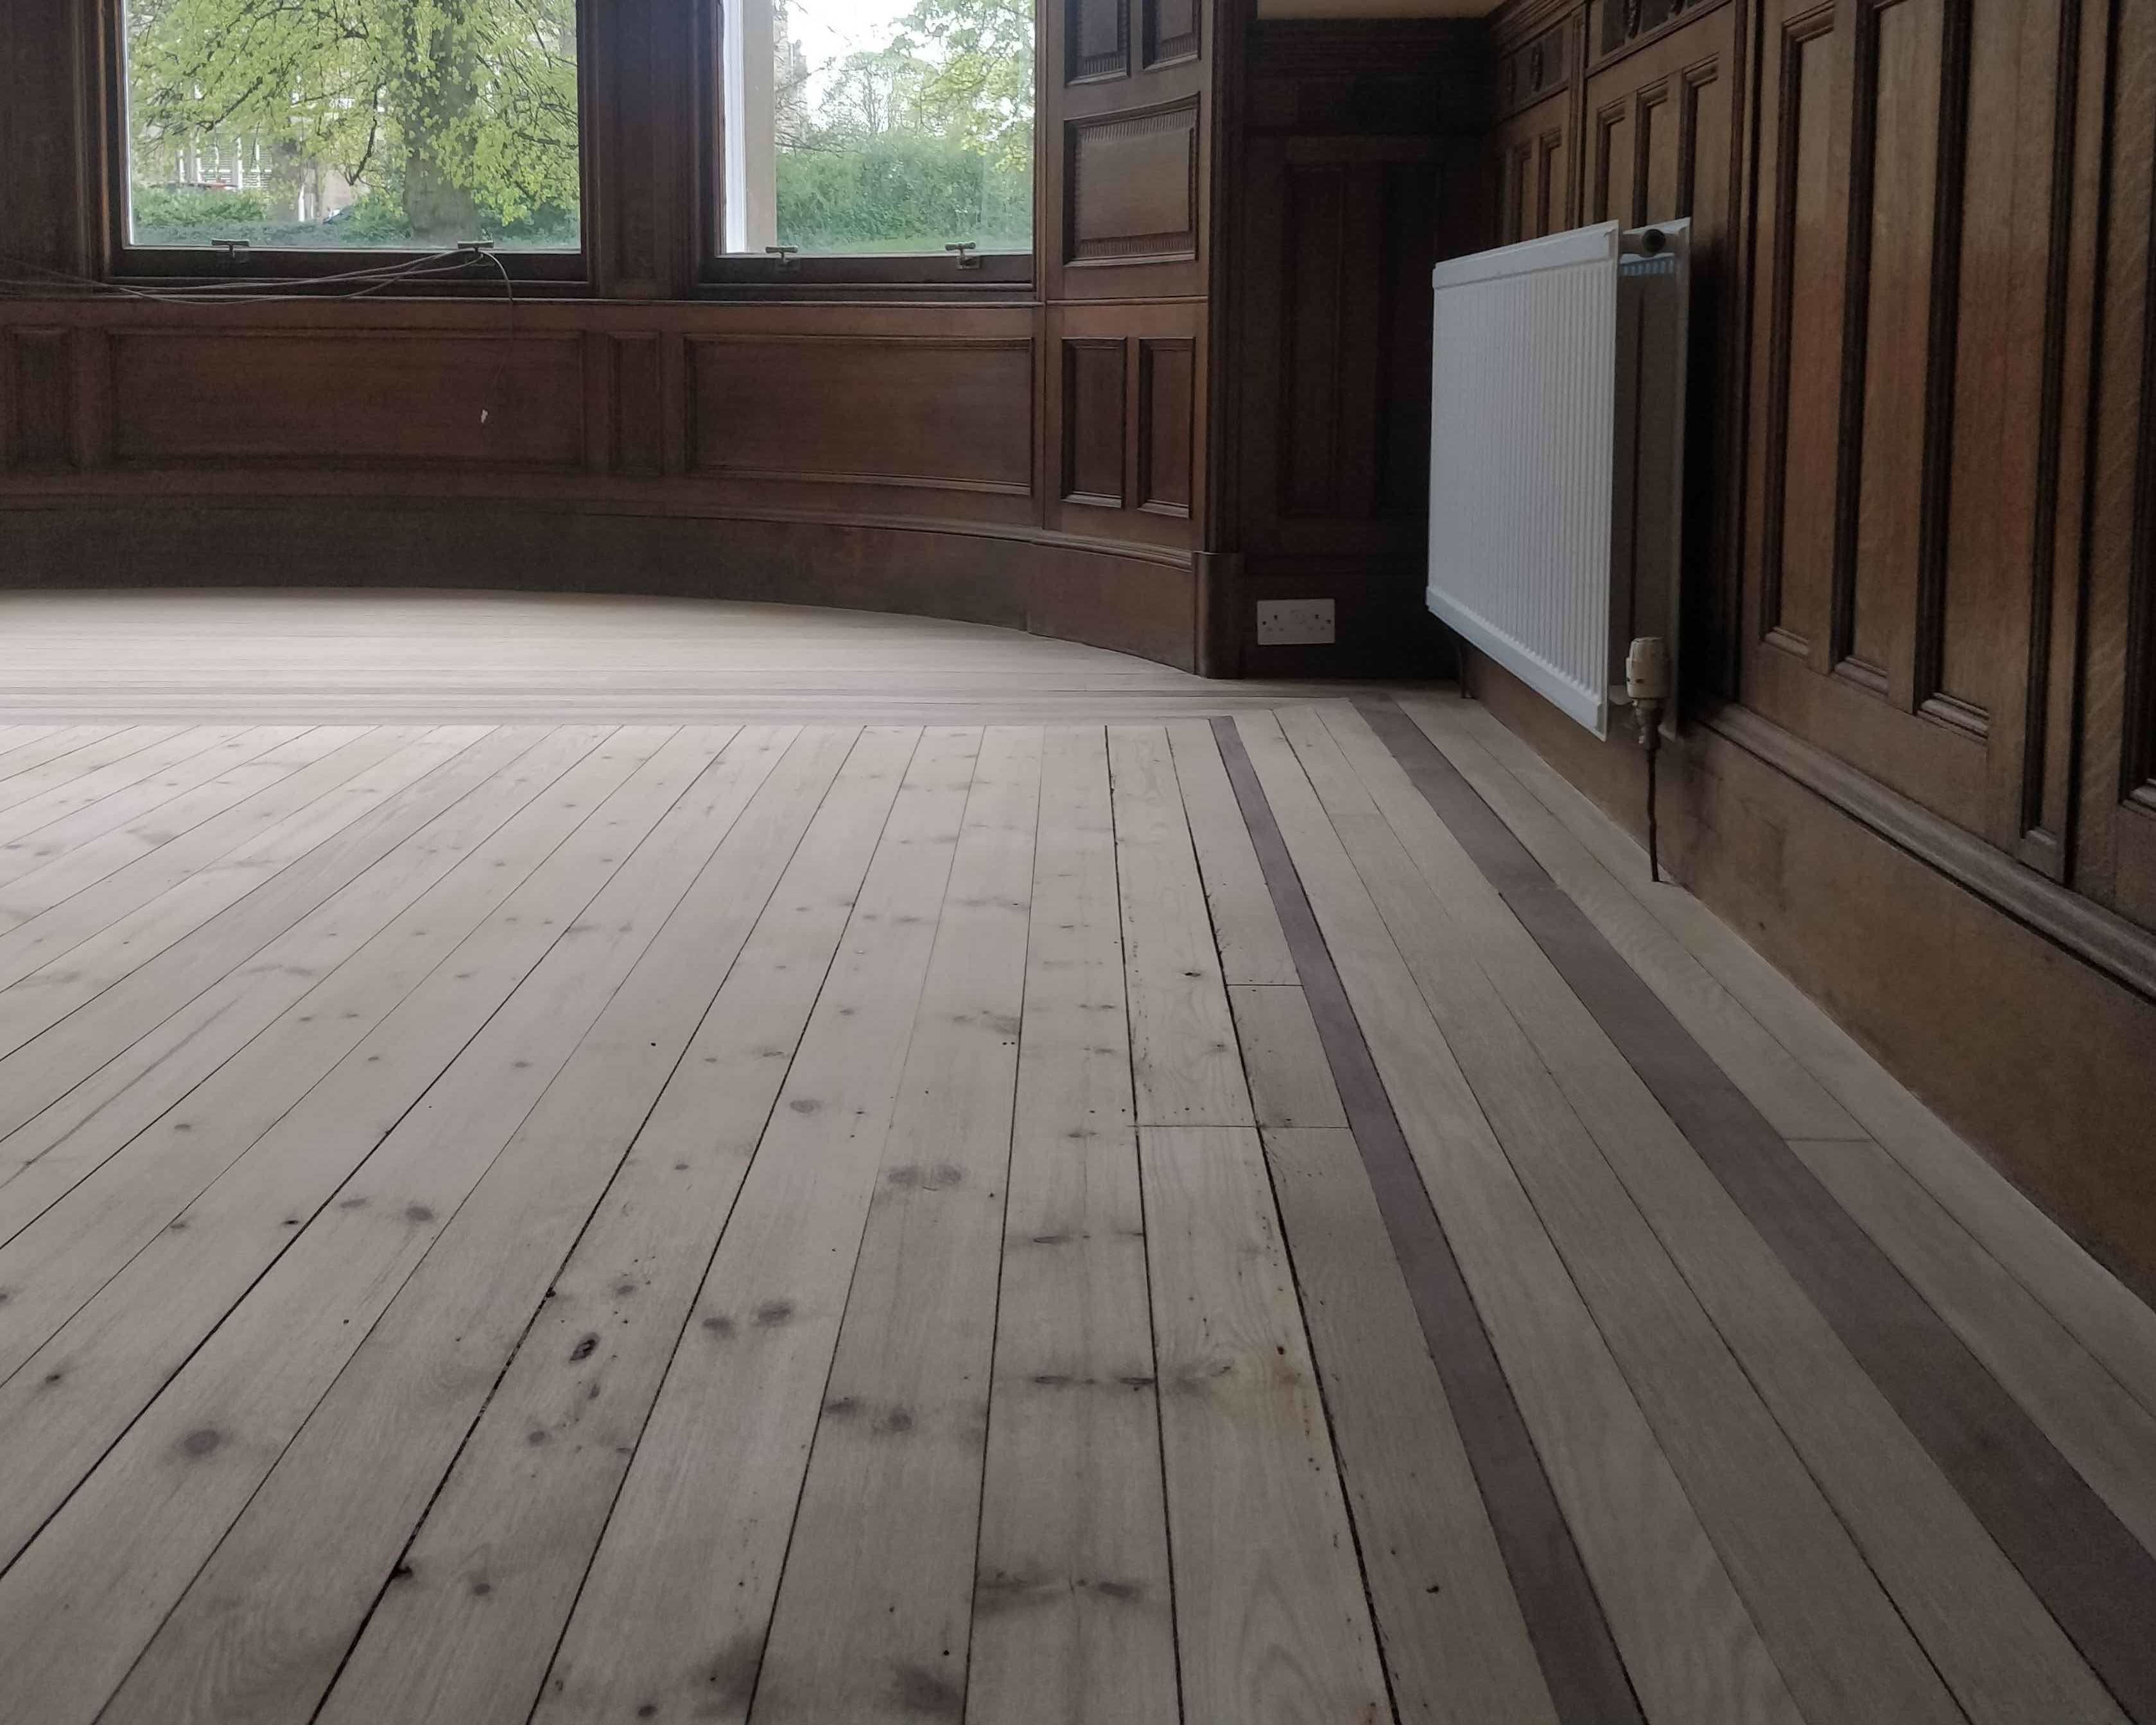 Restoration stain of wooden floor